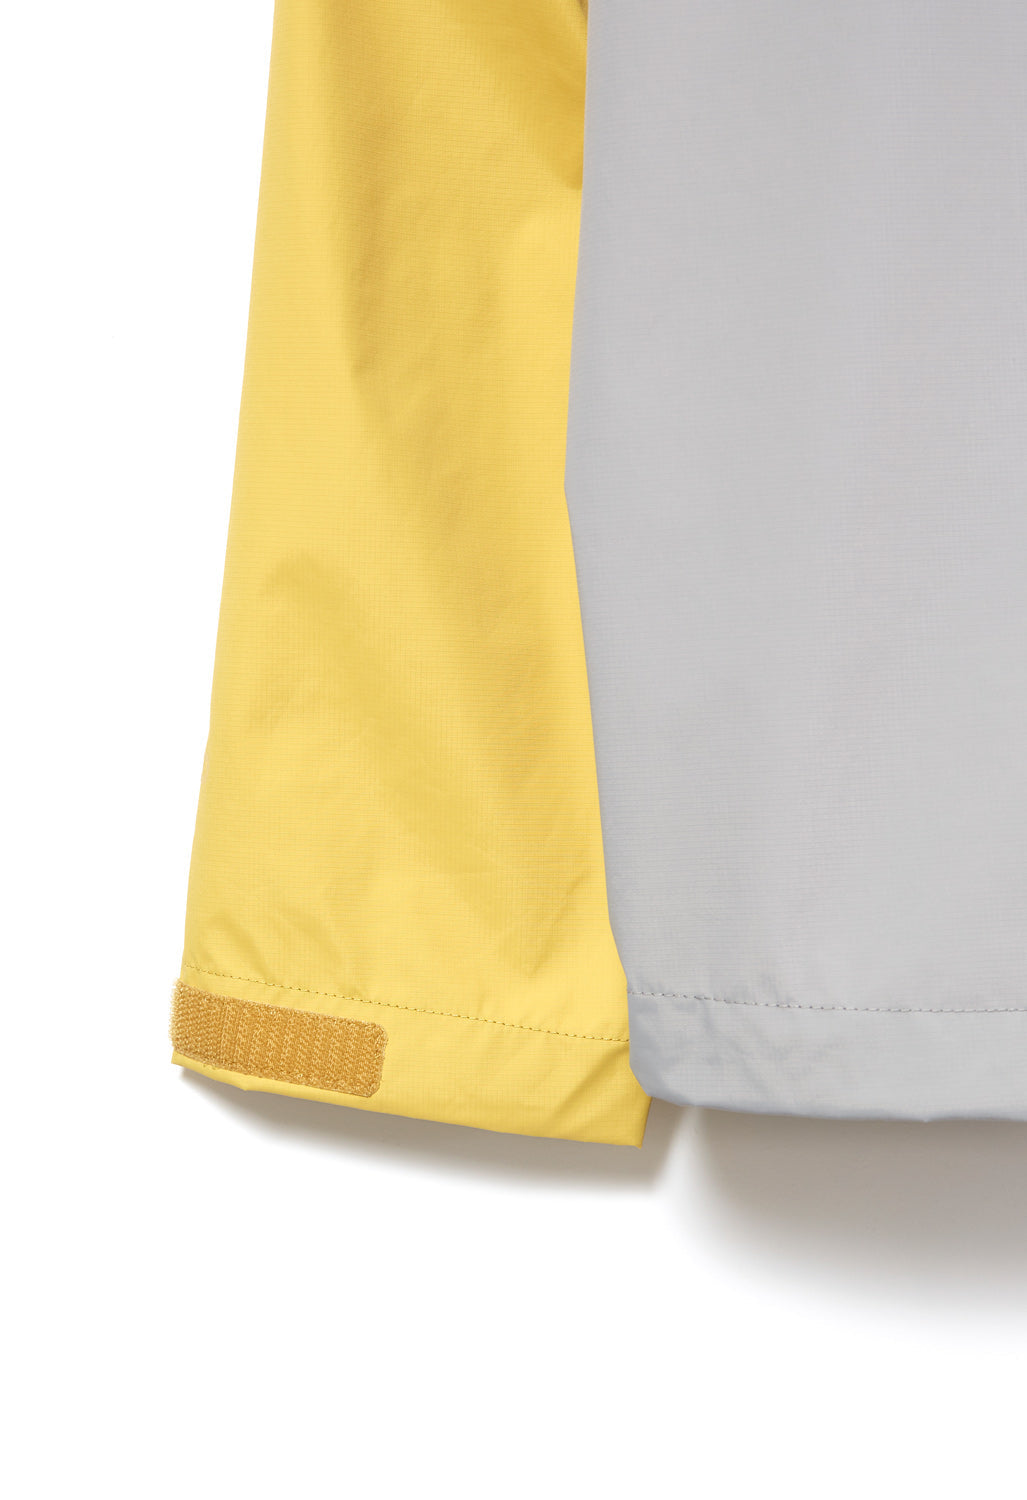 Patagonia Men's Torrentshell 3L Jacket - Surfboard Yellow